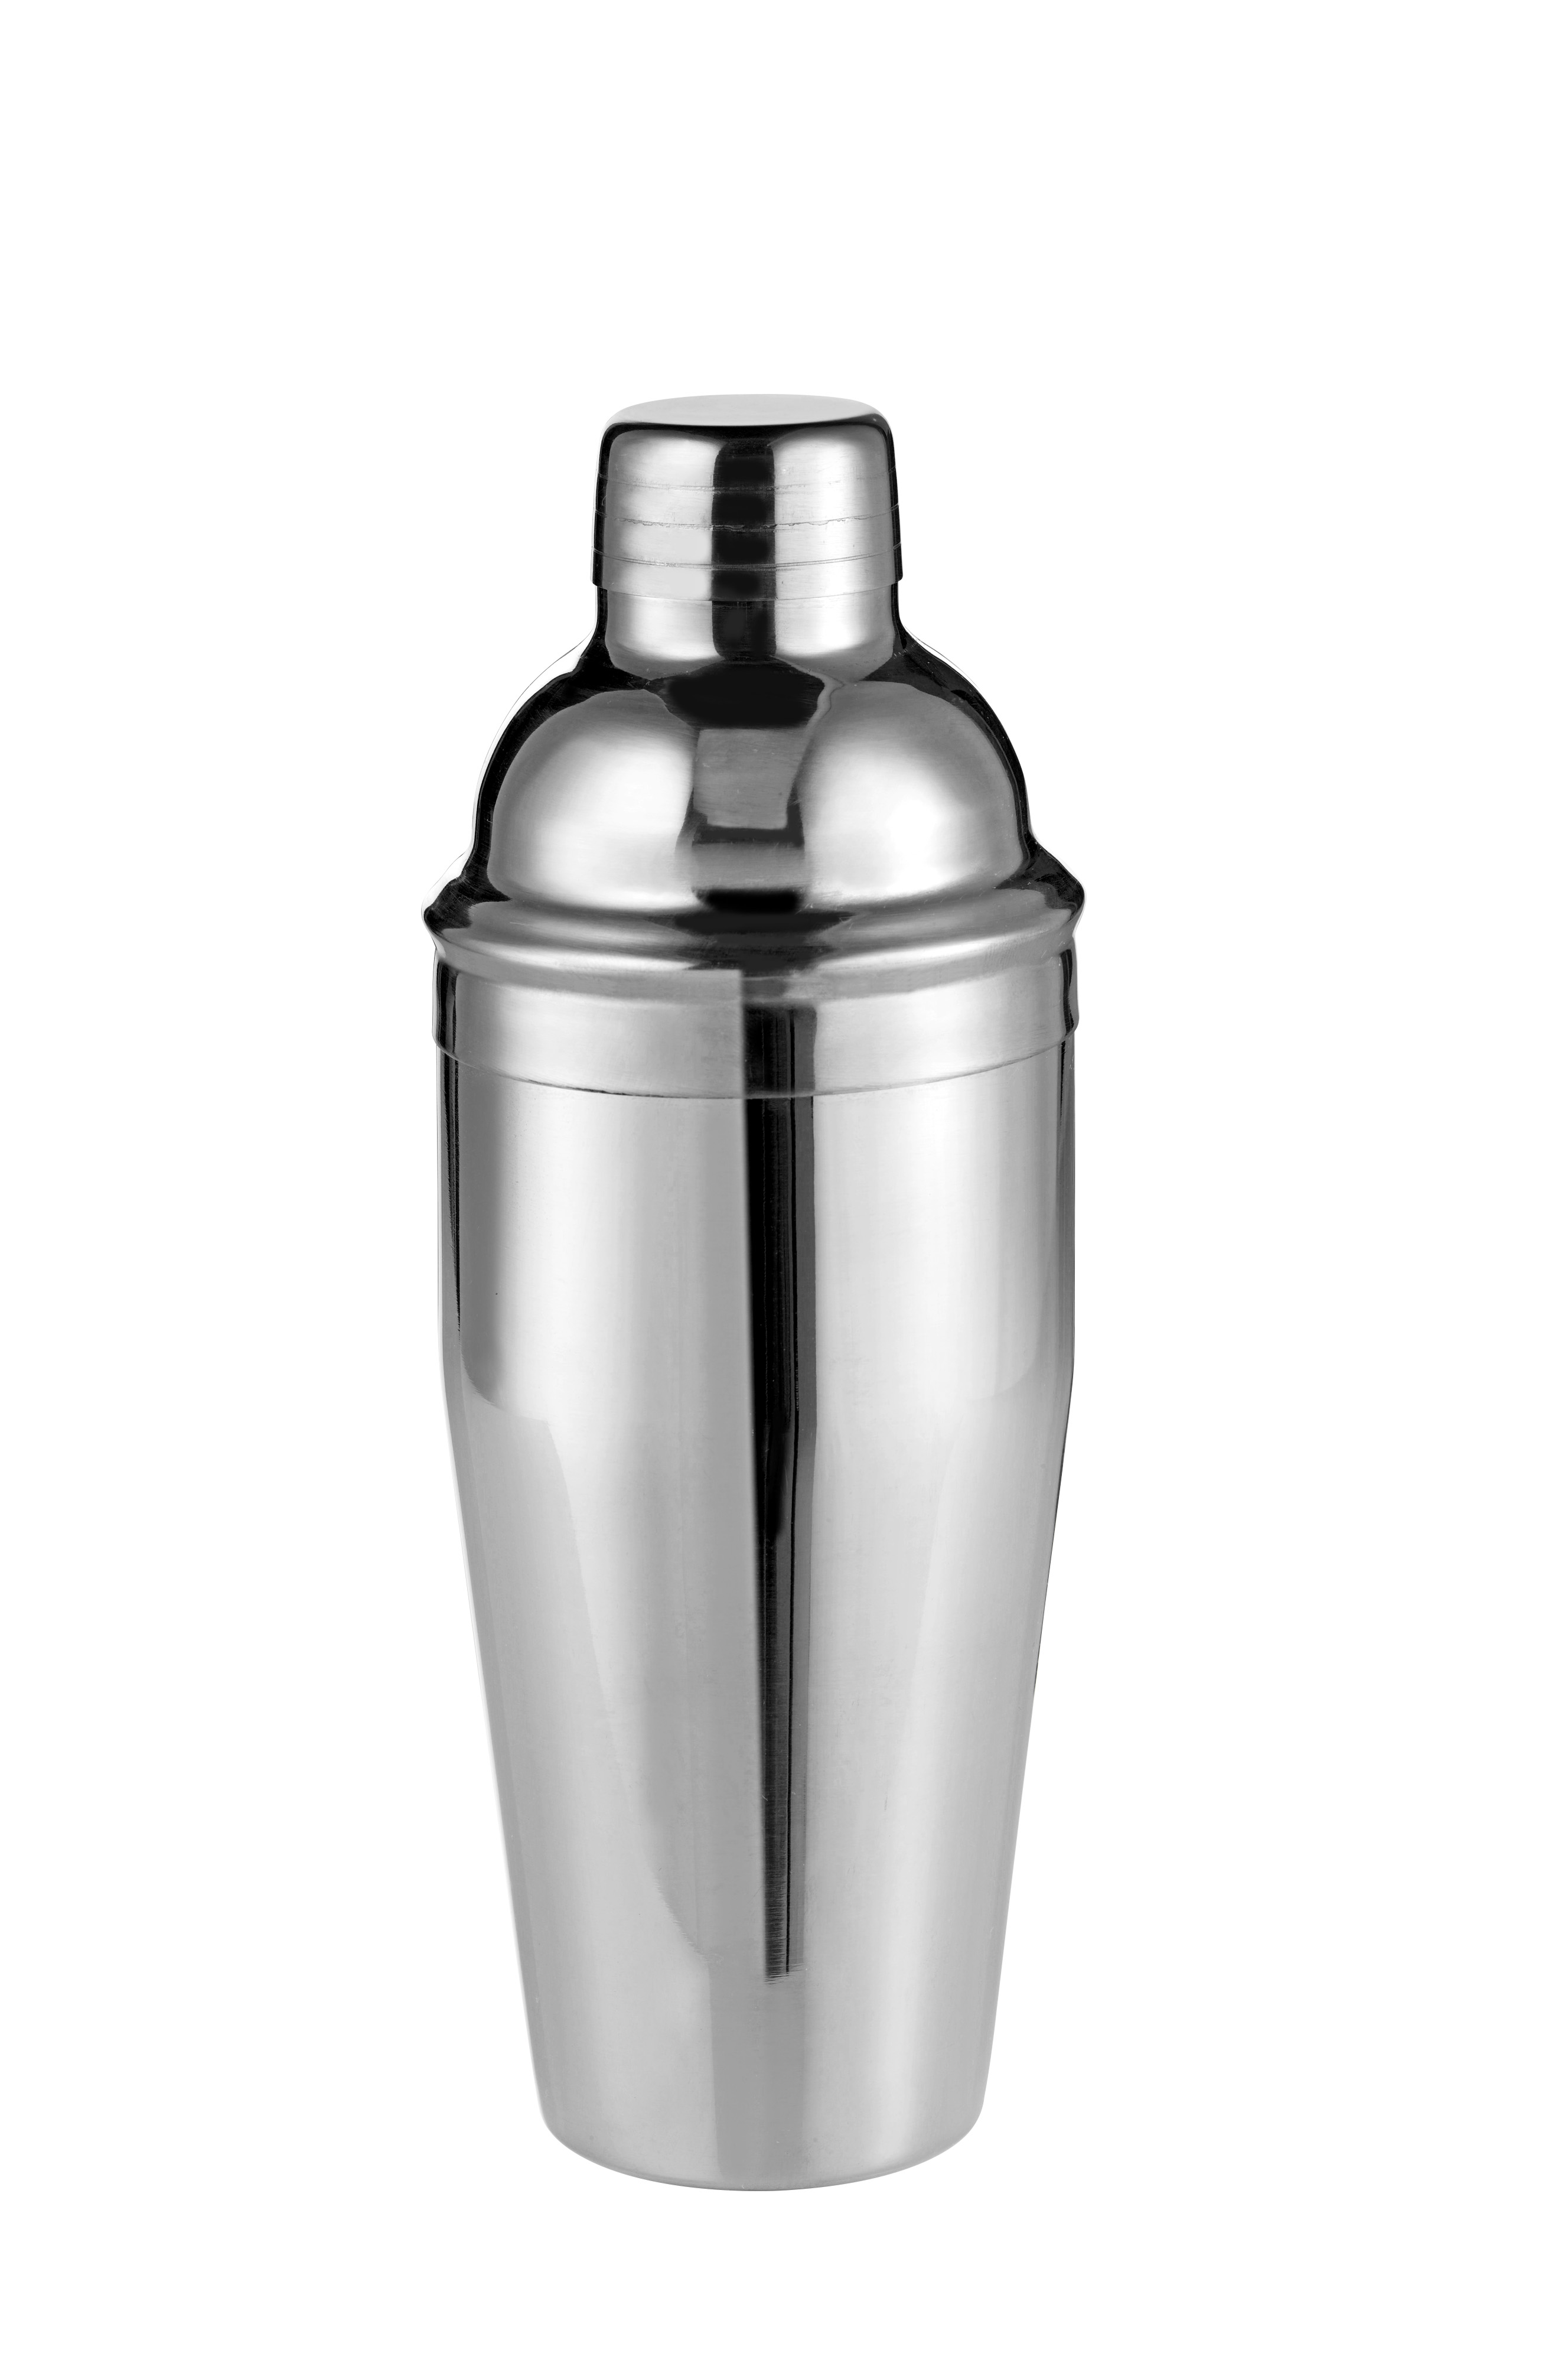 Cocktailshaker LAREDO, Edelstahl 18/10, Inhalt ca. 750 ml, Höhe ca. 24 cm. Durchmesser ca. 8 cm.